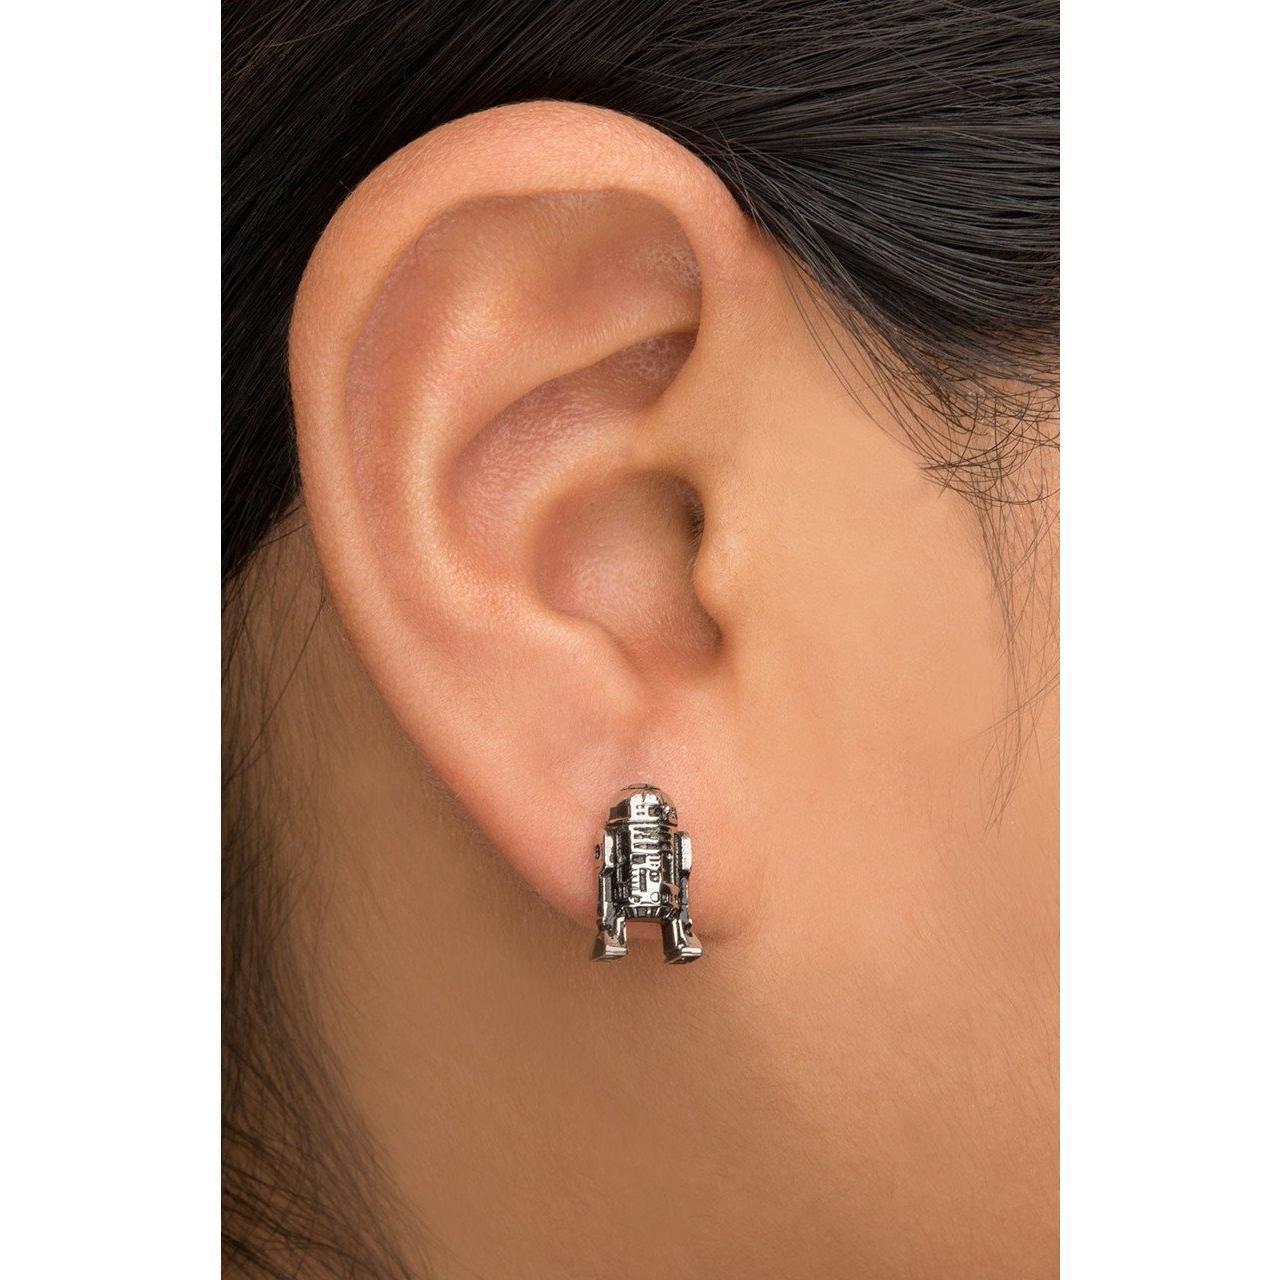 Star Wars R2D2 Earrings - Chrome - Mister SFC - Fashion Jewelry - Fashion Accessories